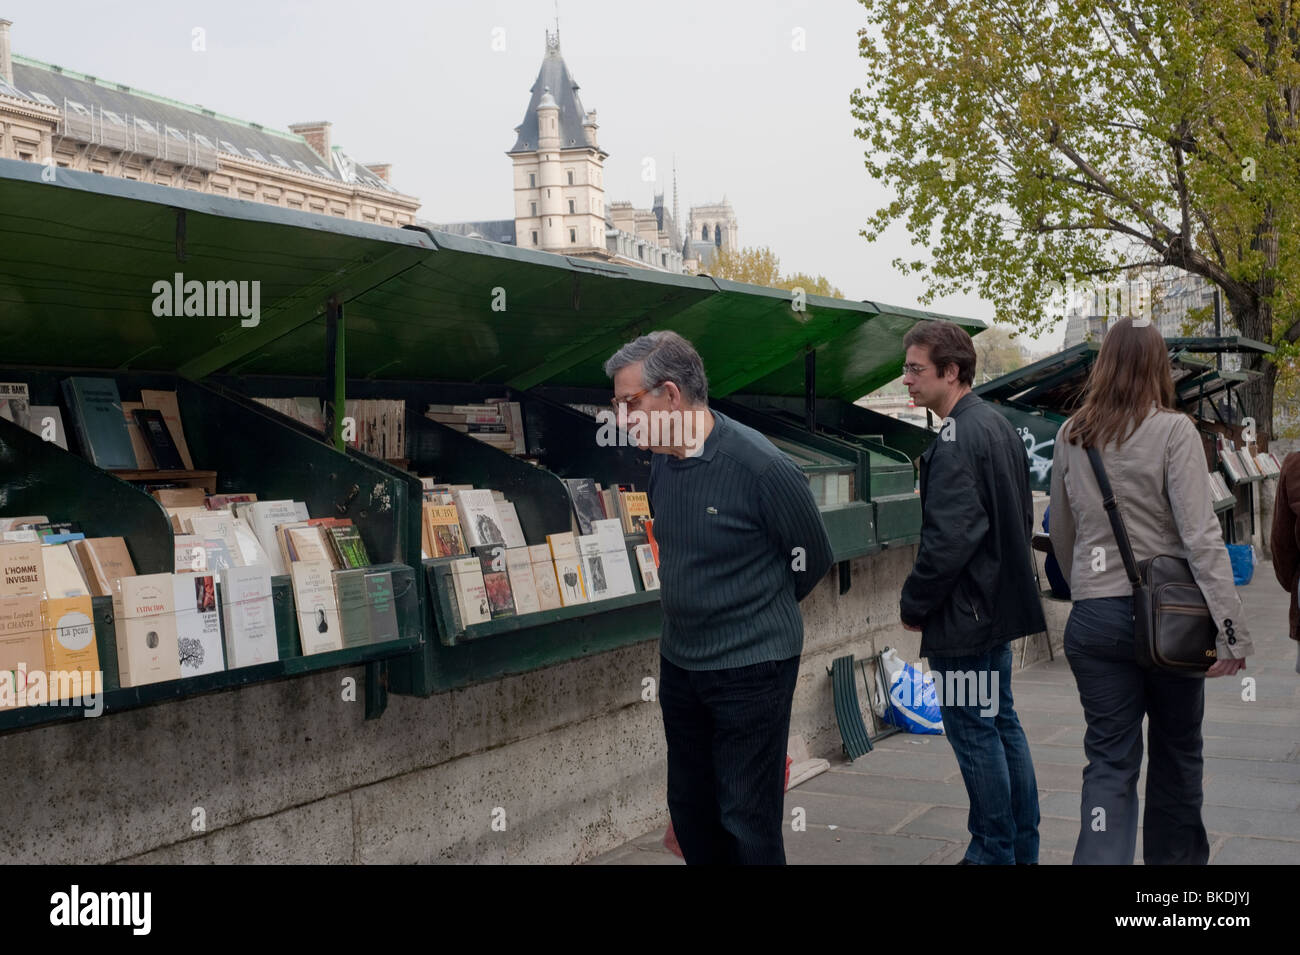 Old Books on Sale Outside Sidewalk Market, Paris, France, Seine River Quay, Bouquinistes, Antique Book Sellers, riverside book kiosks Stock Photo